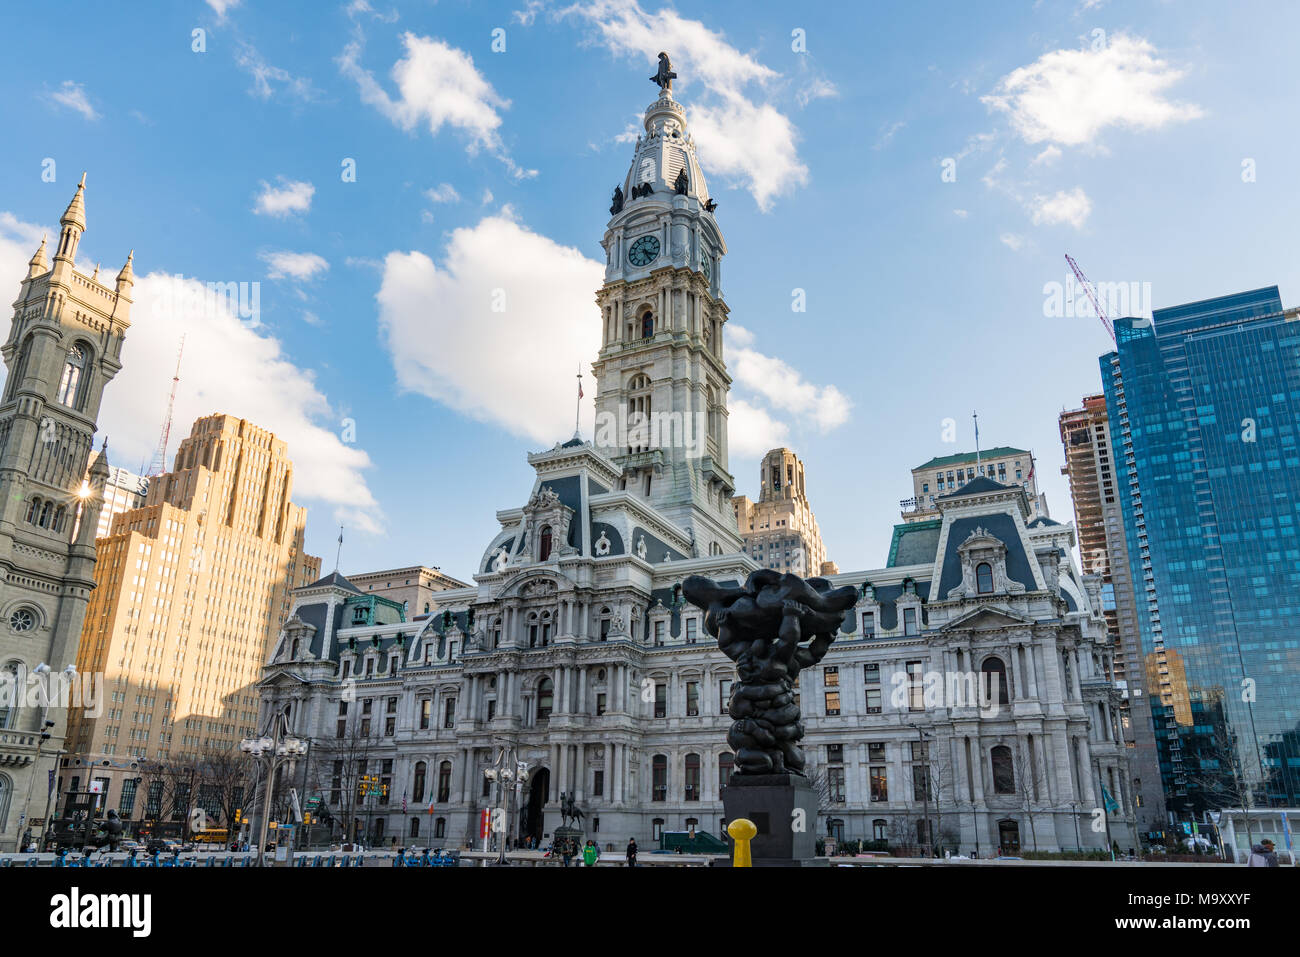 PHILADELPHIA, PA - 10. MÄRZ 2018: Historisches Rathaus Gebäude in der Innenstadt von Philadelphia, Pennsylvania Stockfoto